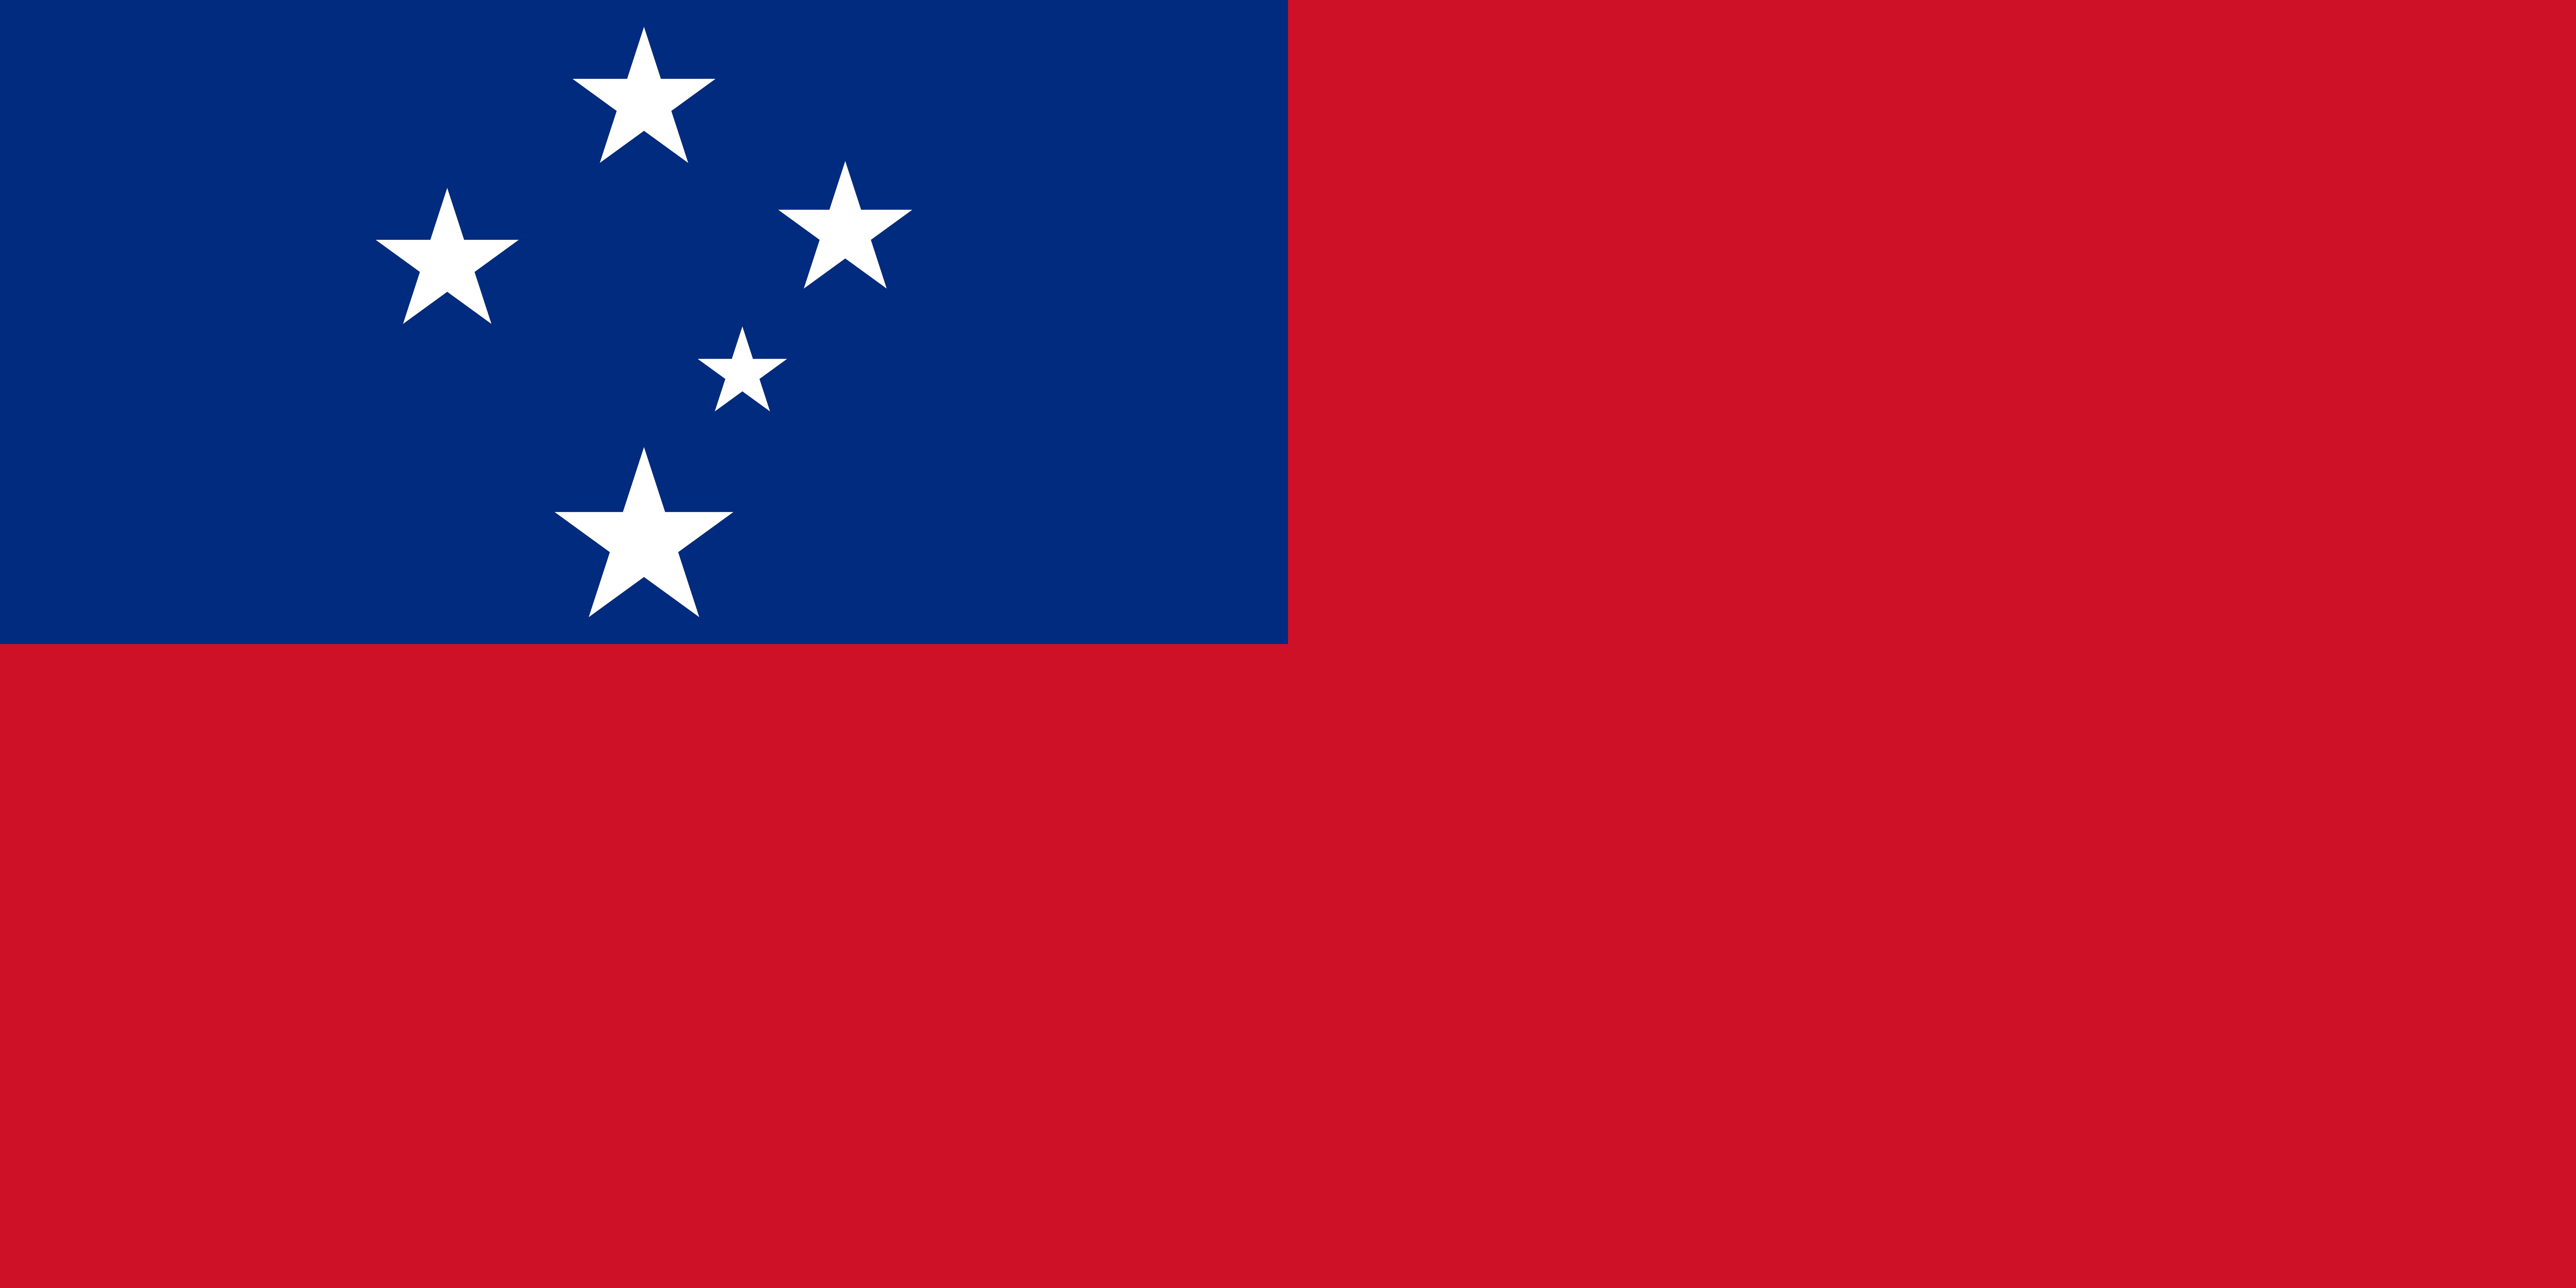 Free Samoa Flag Documents: PDF, DOC, DOCX, HTML & More!